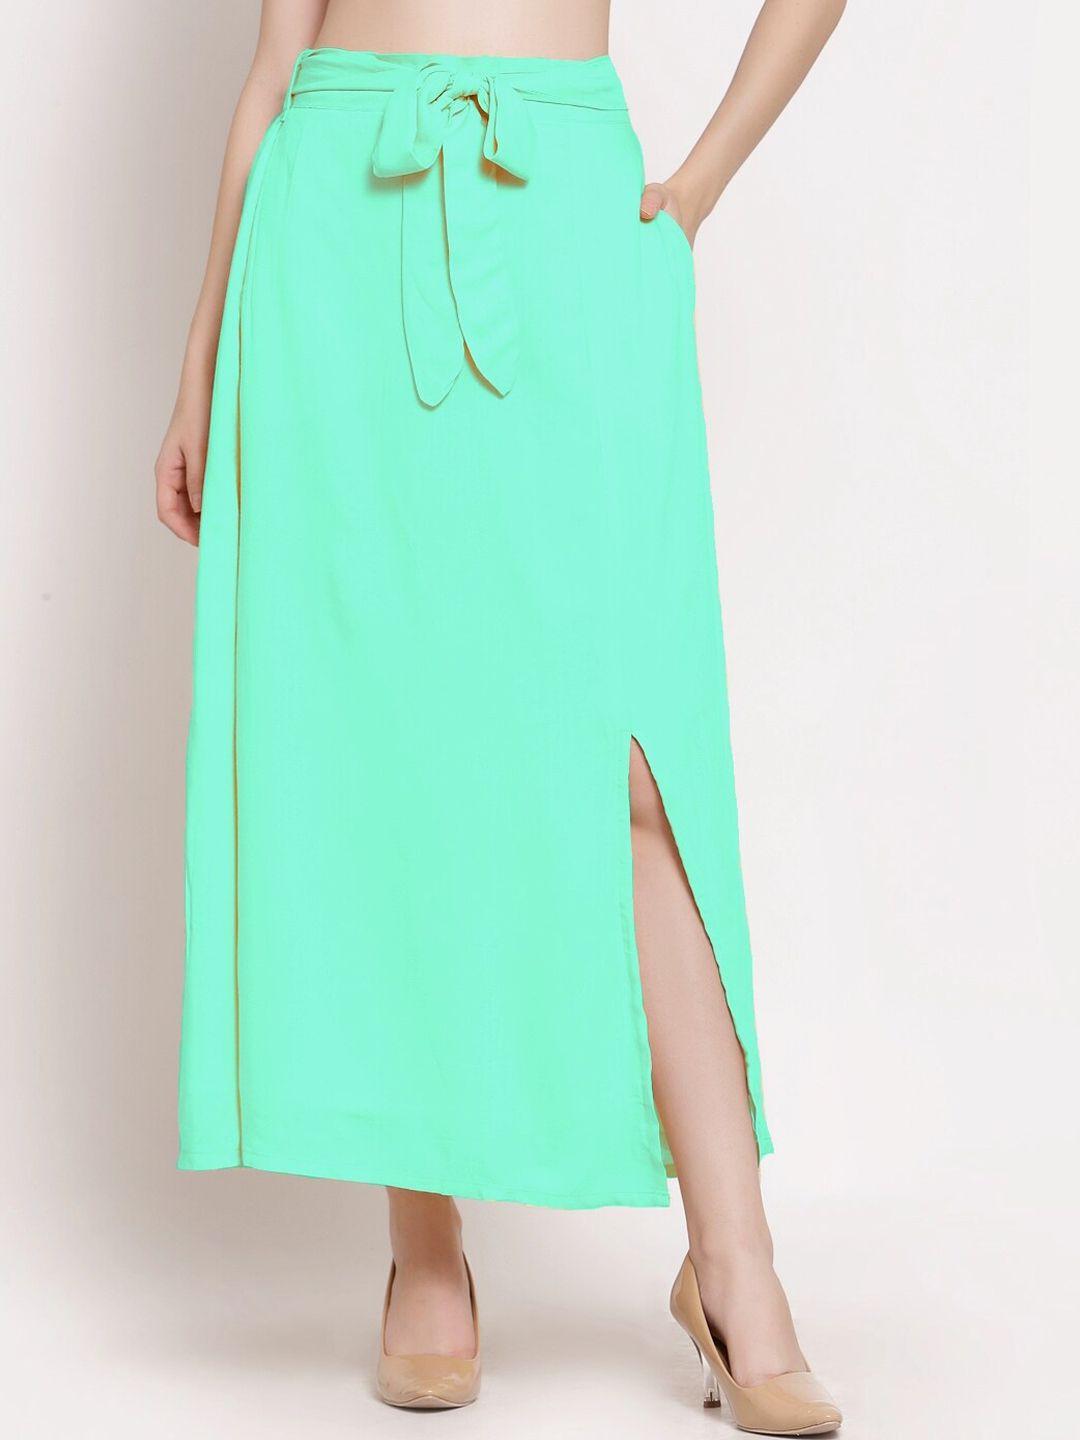 patrorna women teal green solid maxi skirt